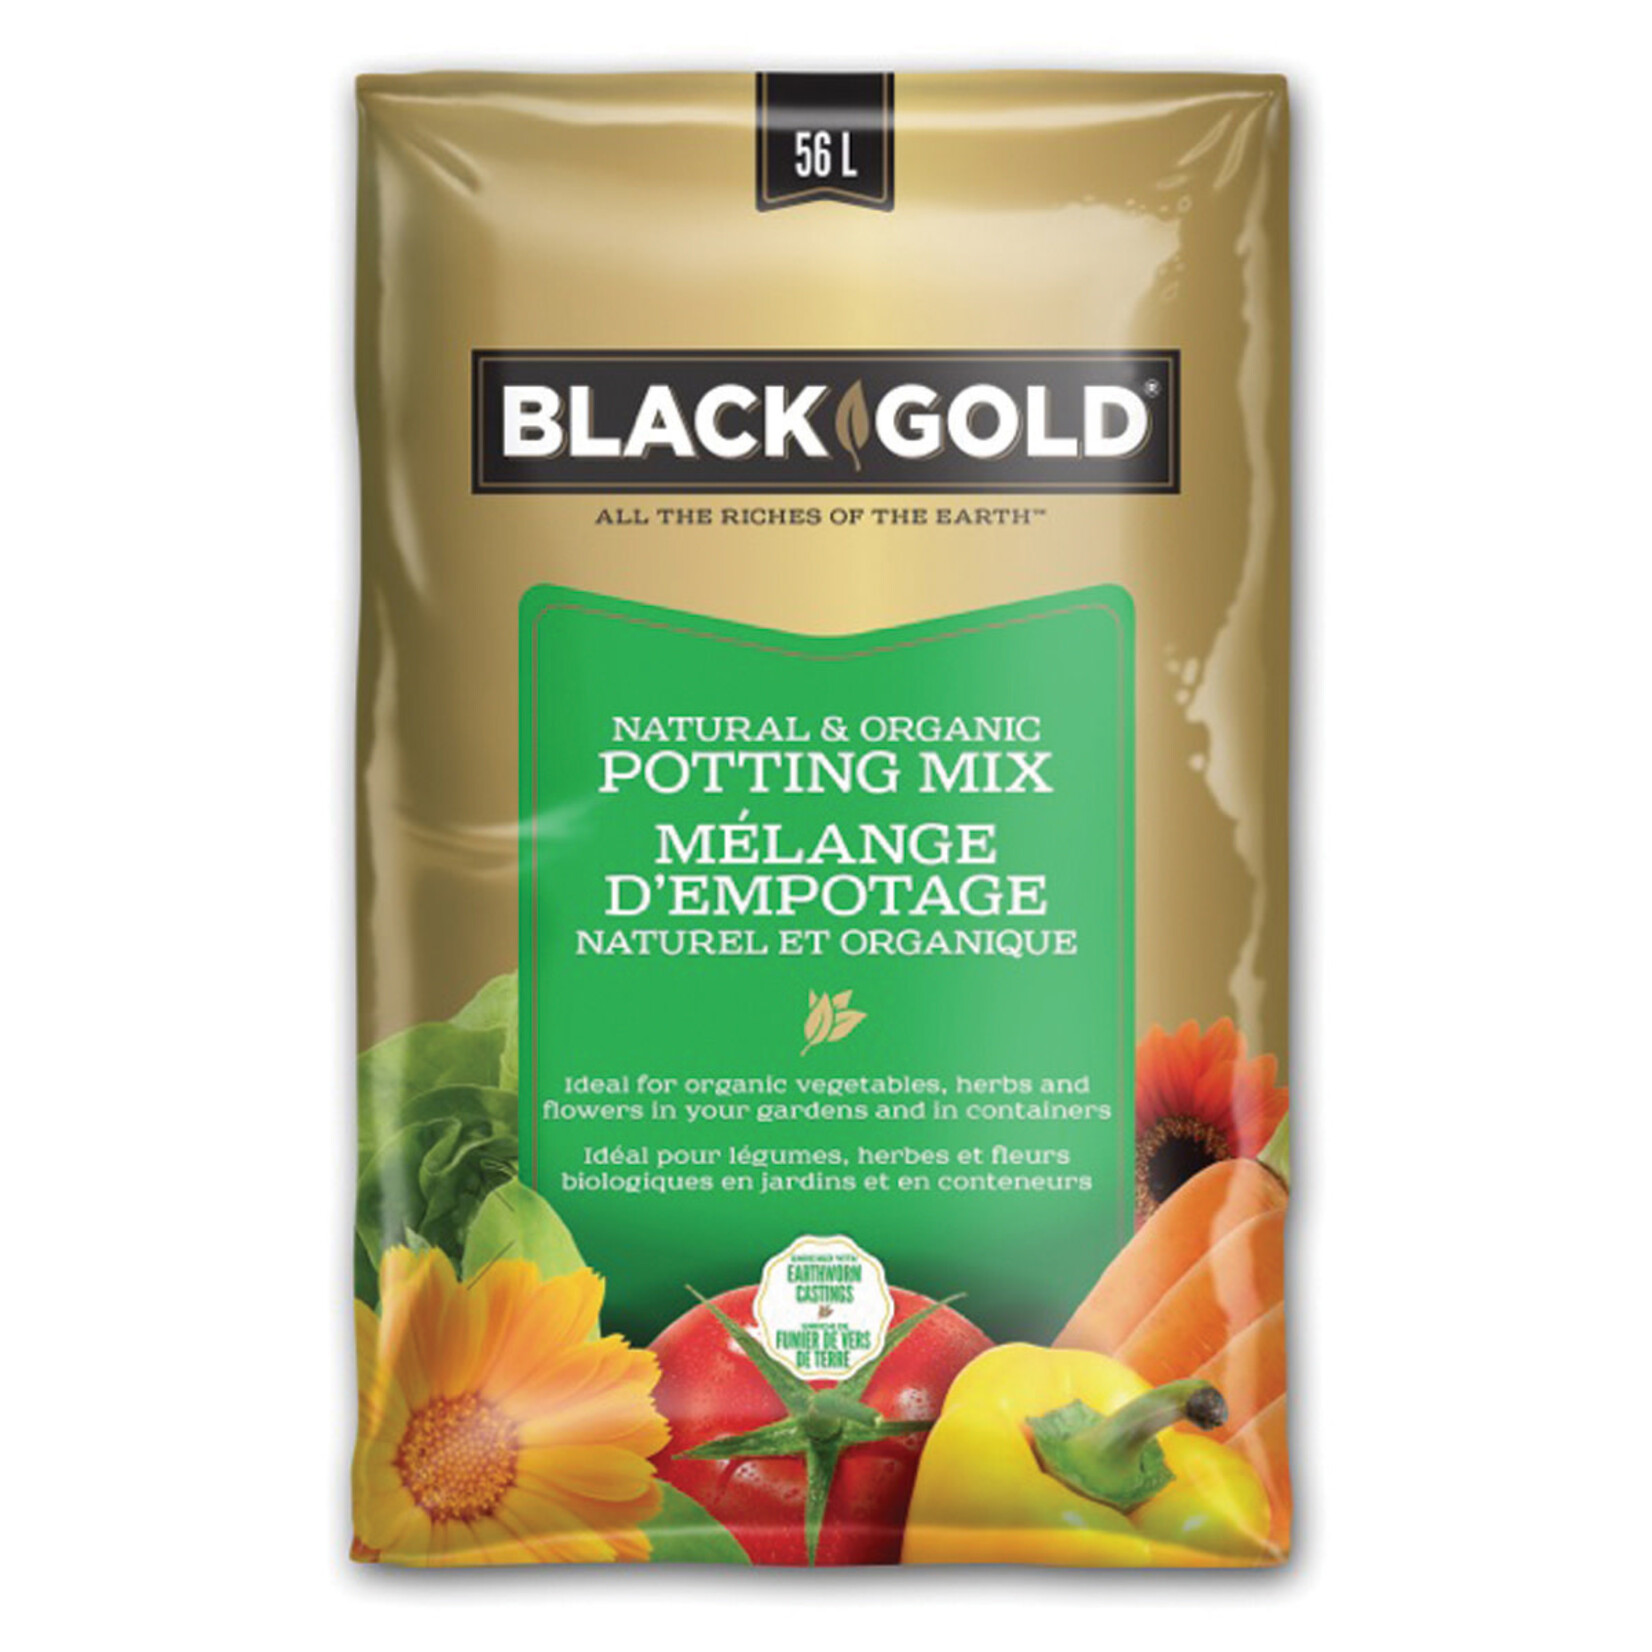 Sun Gro Black Gold Natural & Organic Potting Mix - 56 L